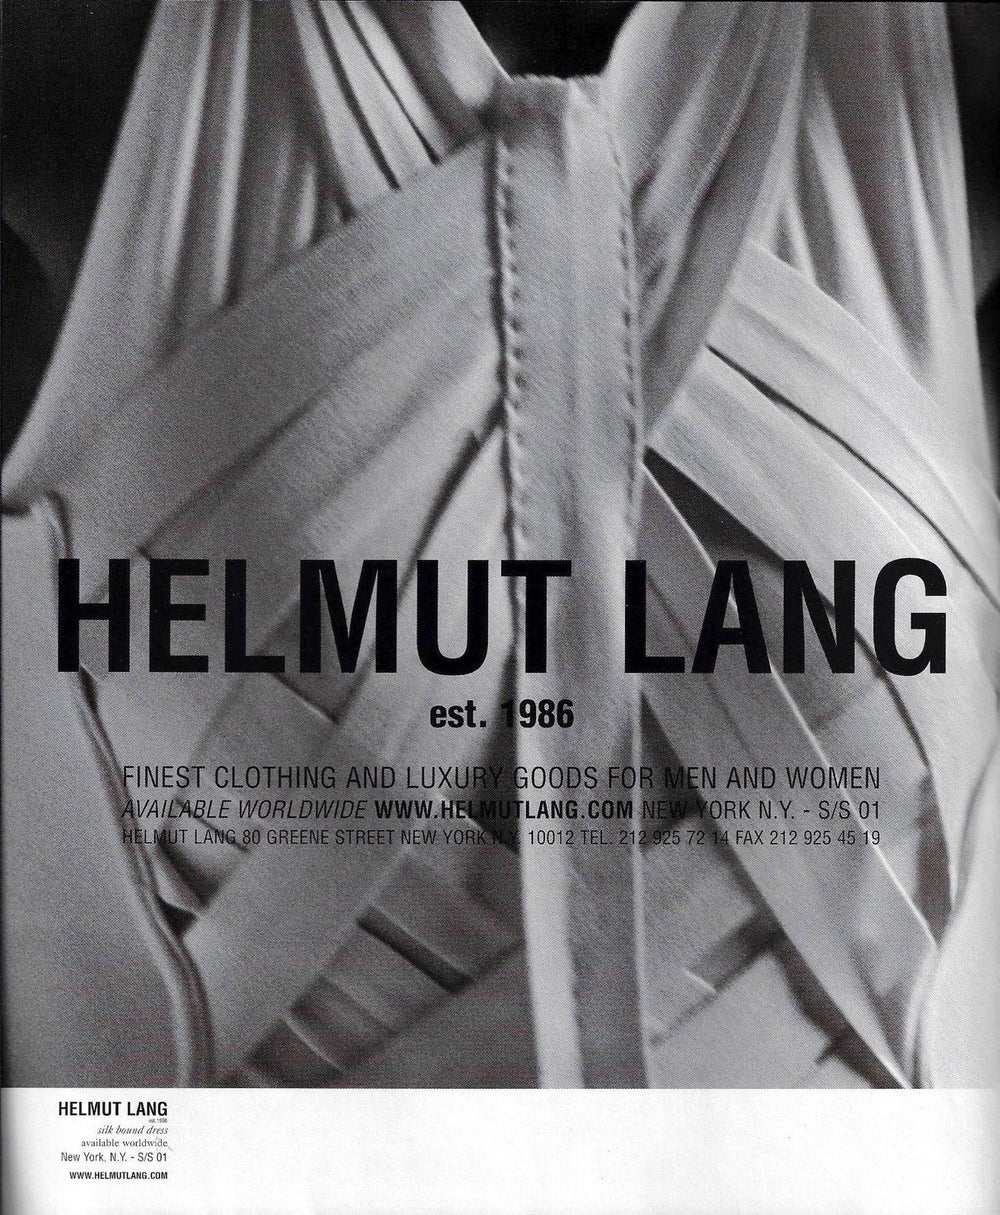 Helmut Lang SS01 Cross Strap Bound Top Sample